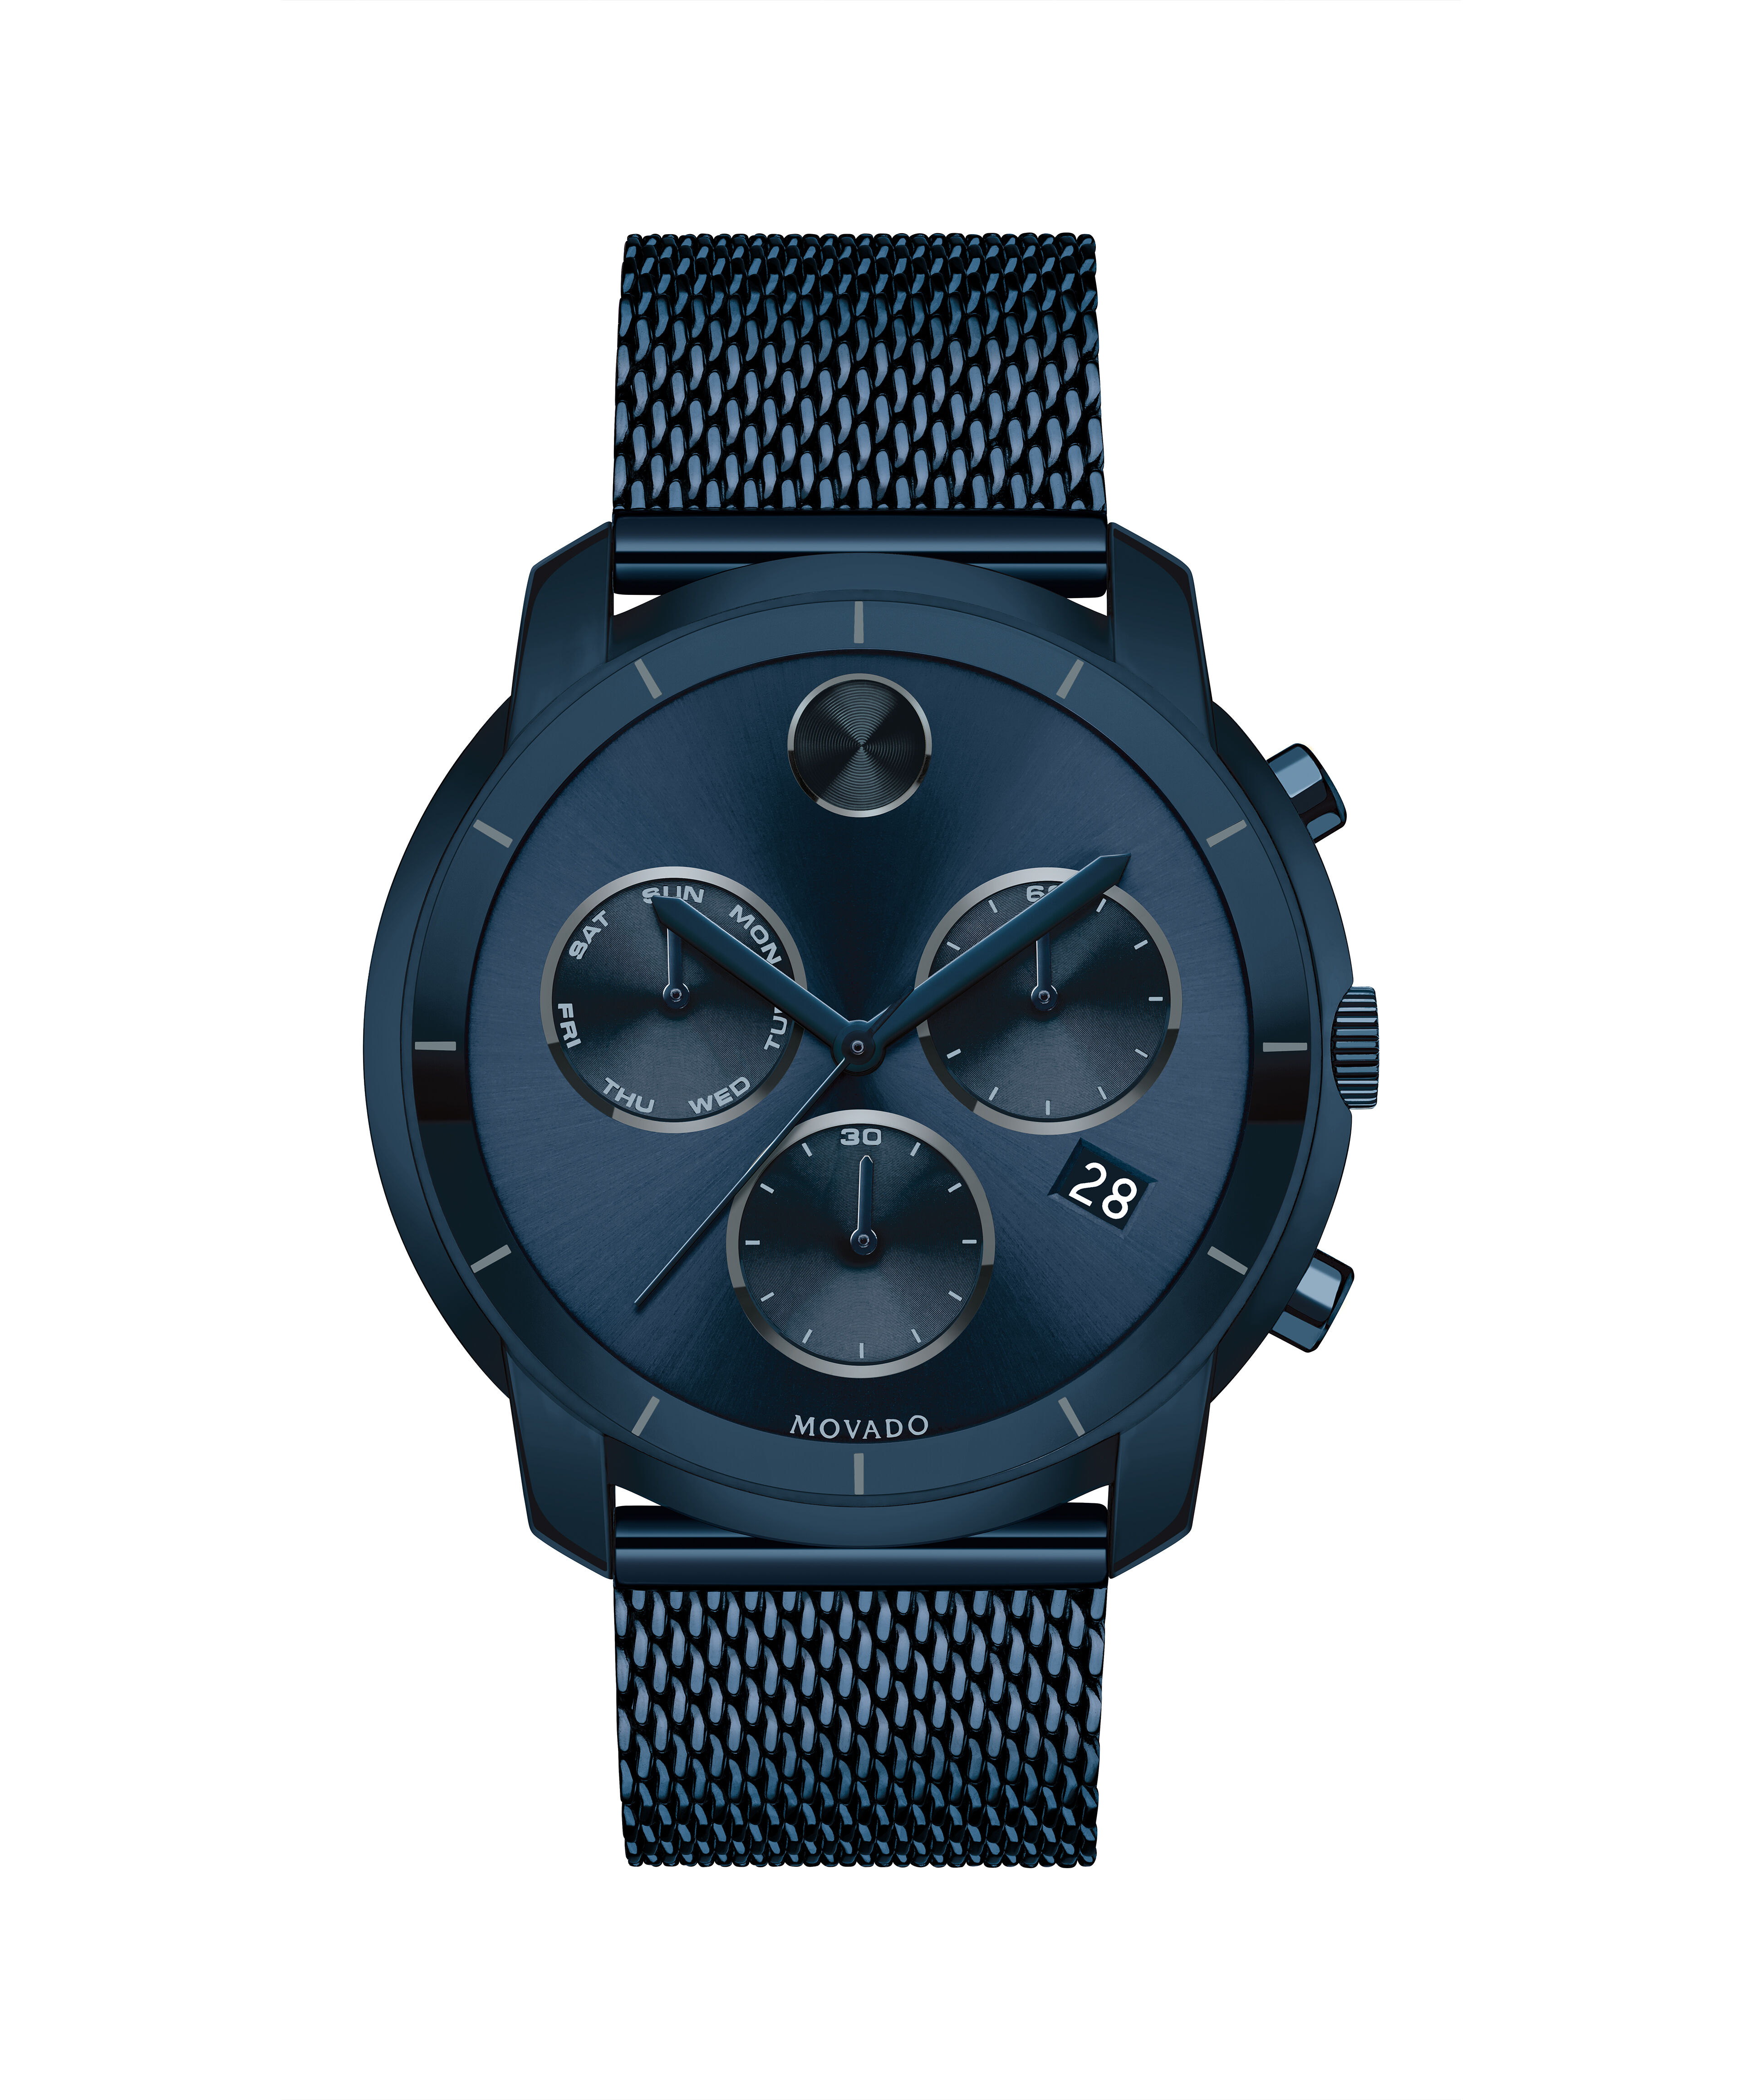 1:1 Replica Luxuary Watches